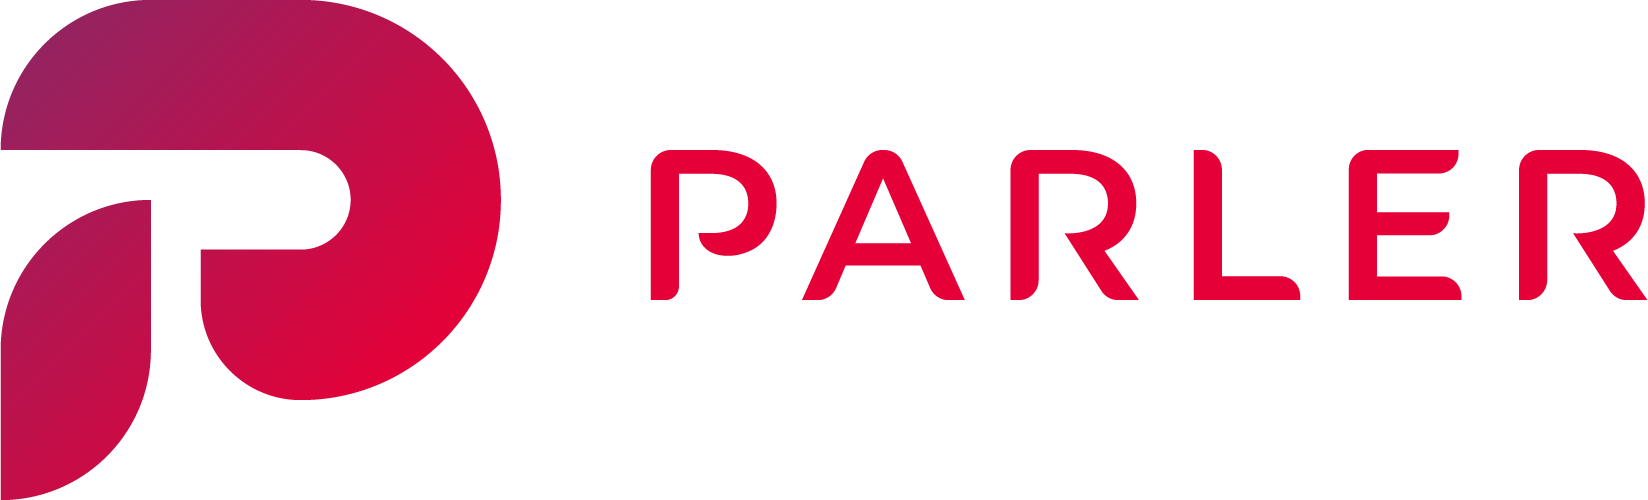 Parler official logo